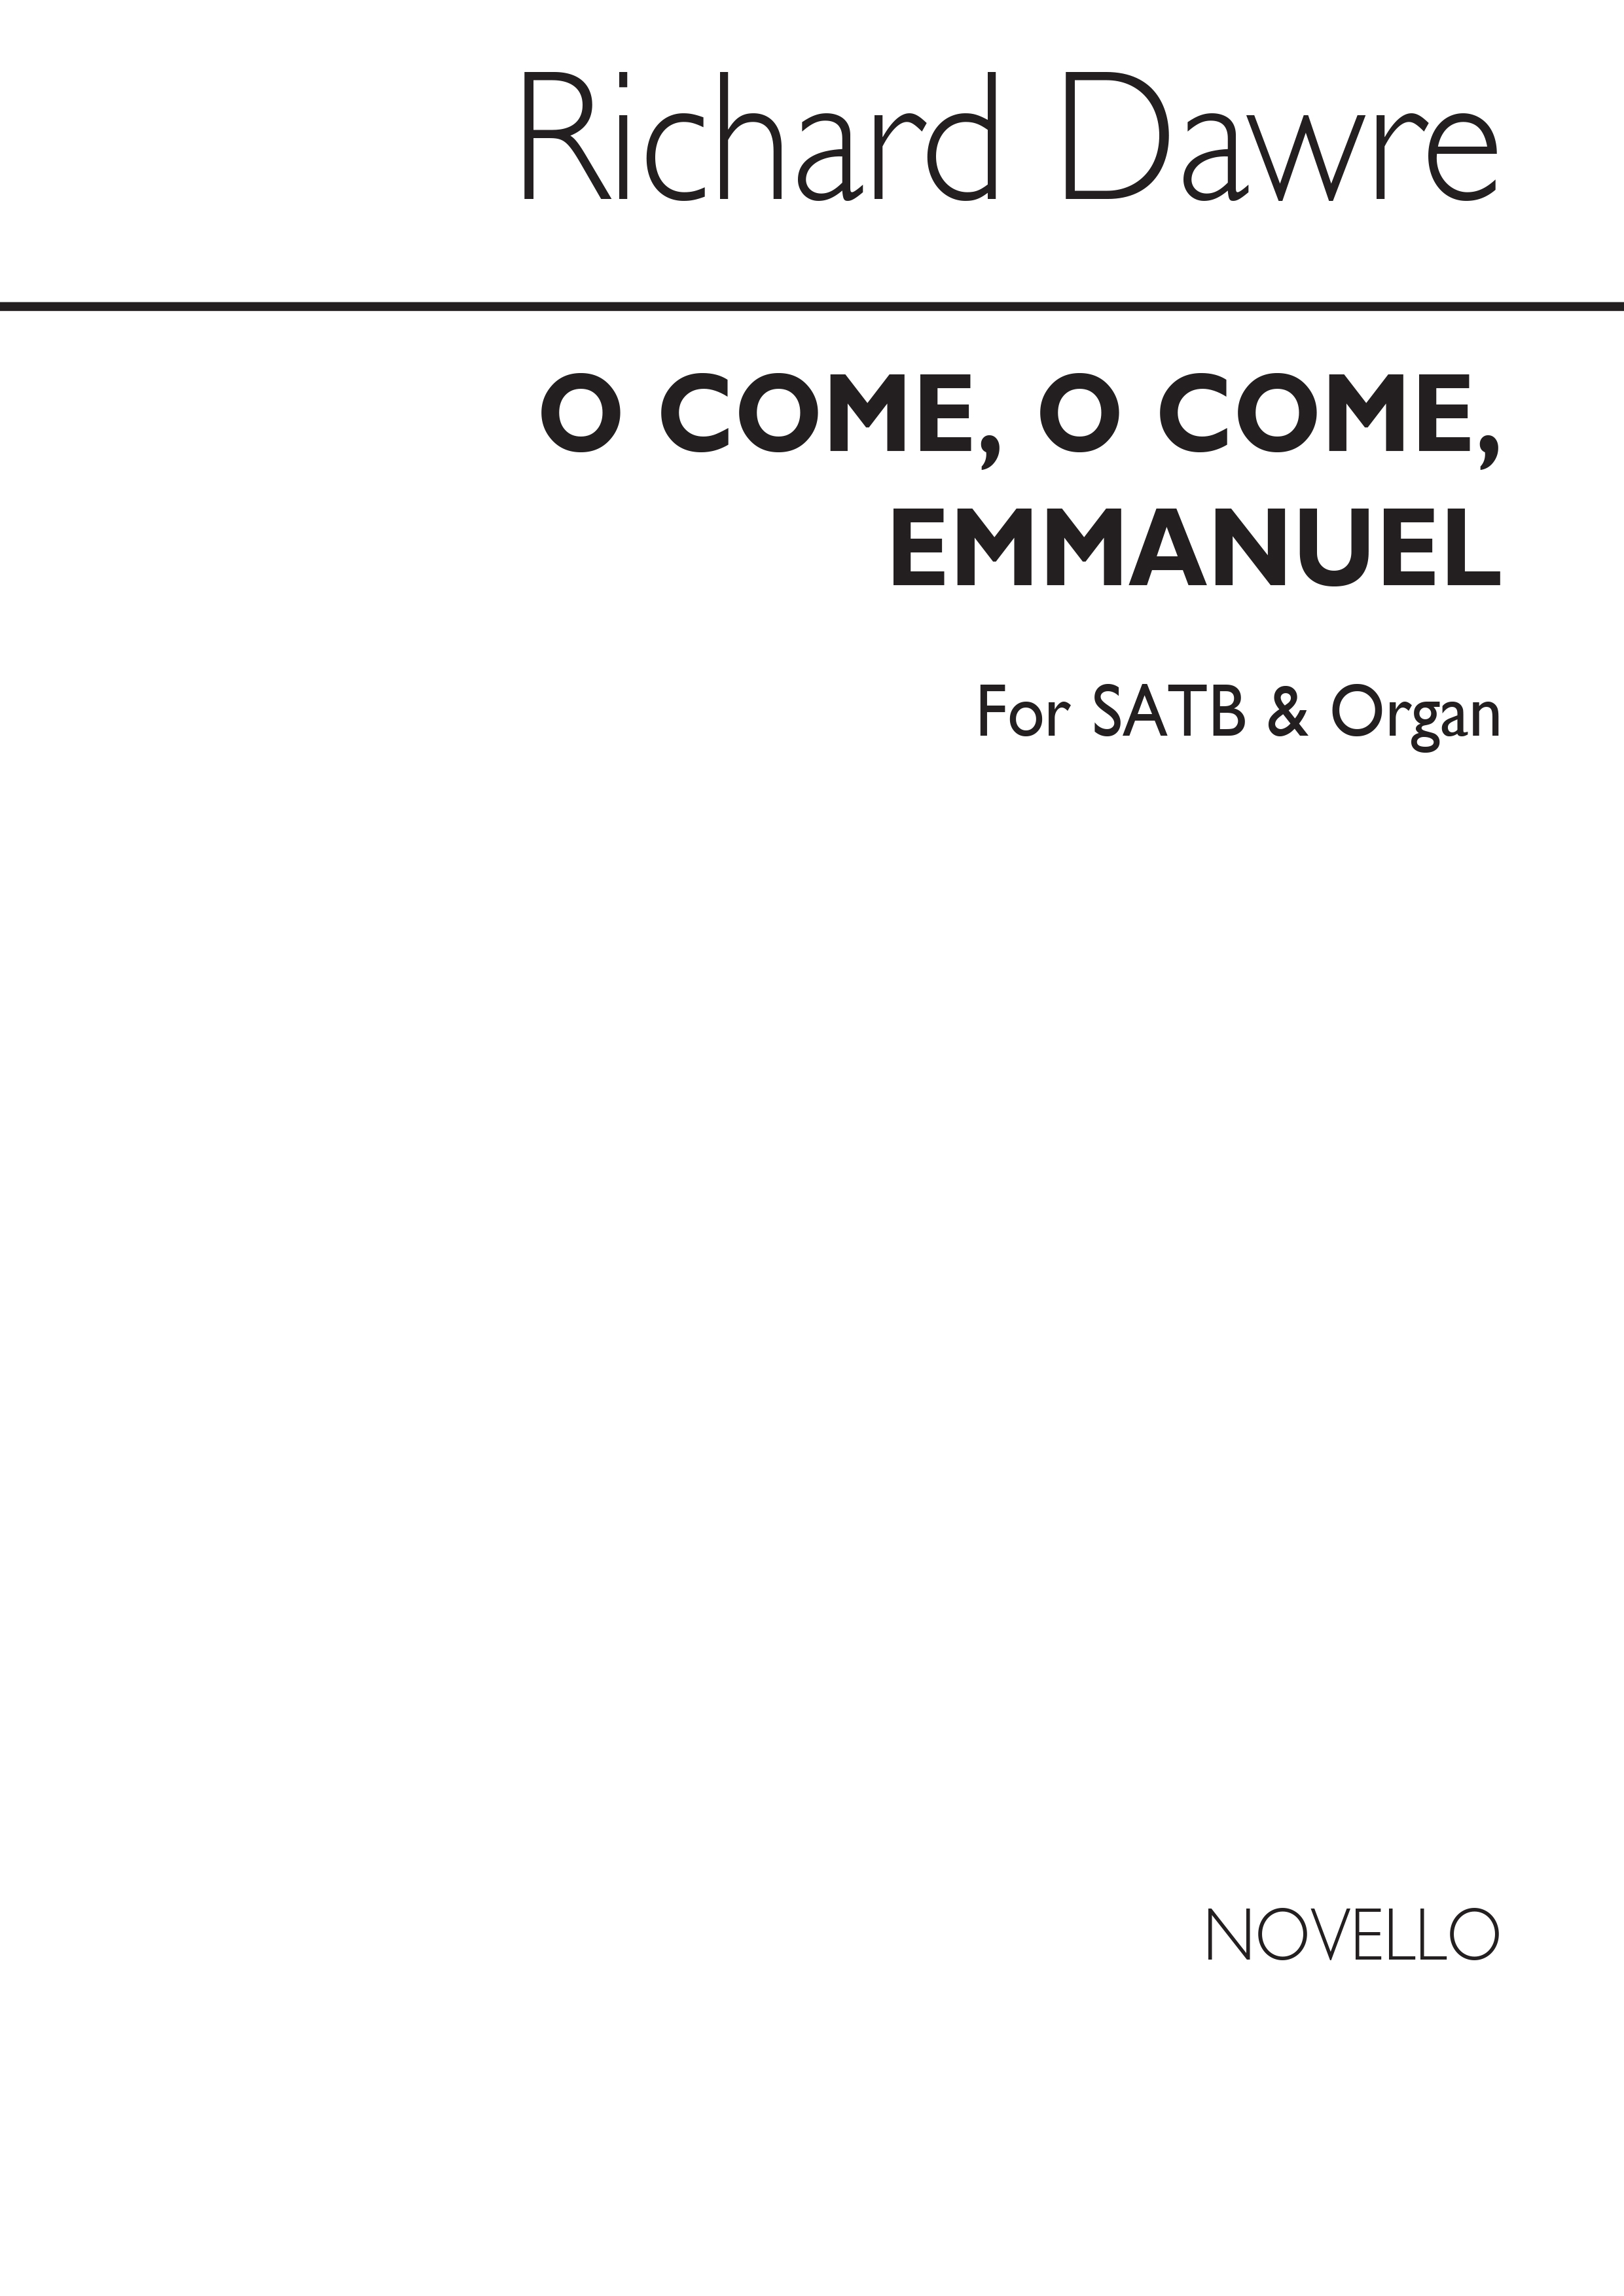 Richard Dawre: O Come, O Come Emmanuel (Advent Hymn) Satb/Organ